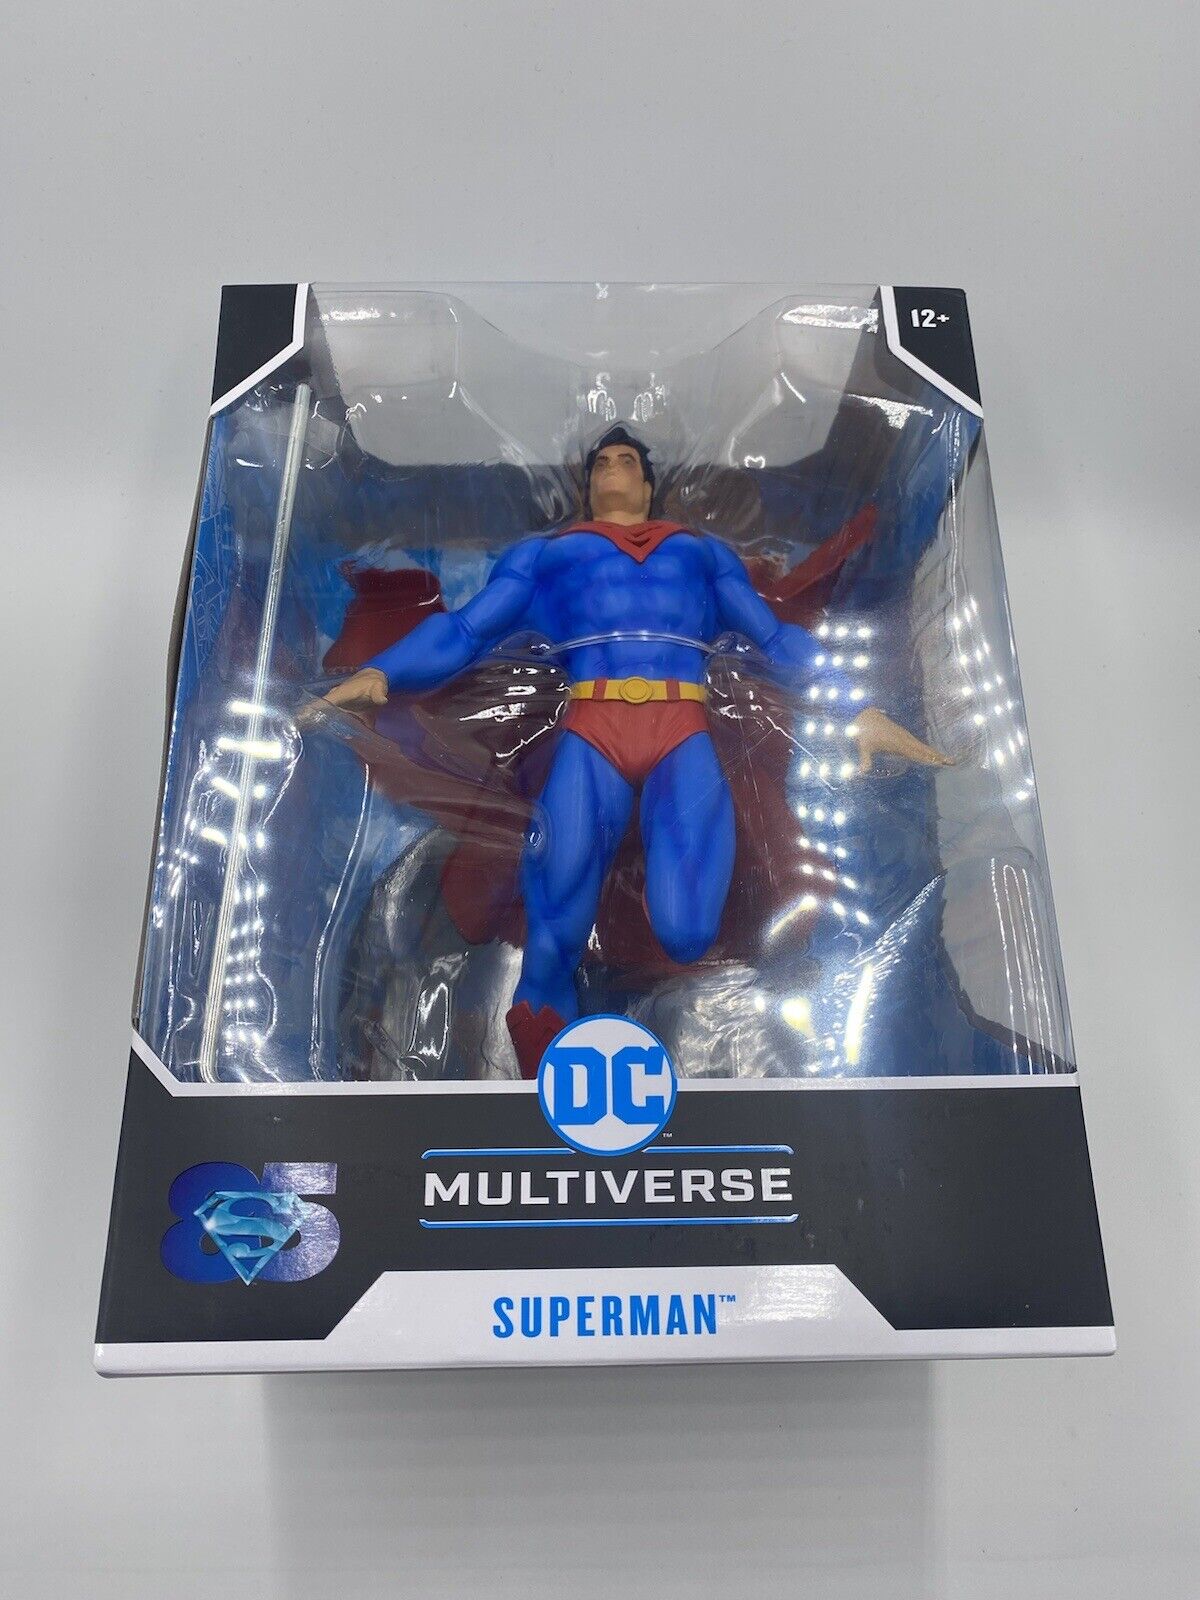 Superman For Tomorrow DC Multiverse Superman Statue - 12”